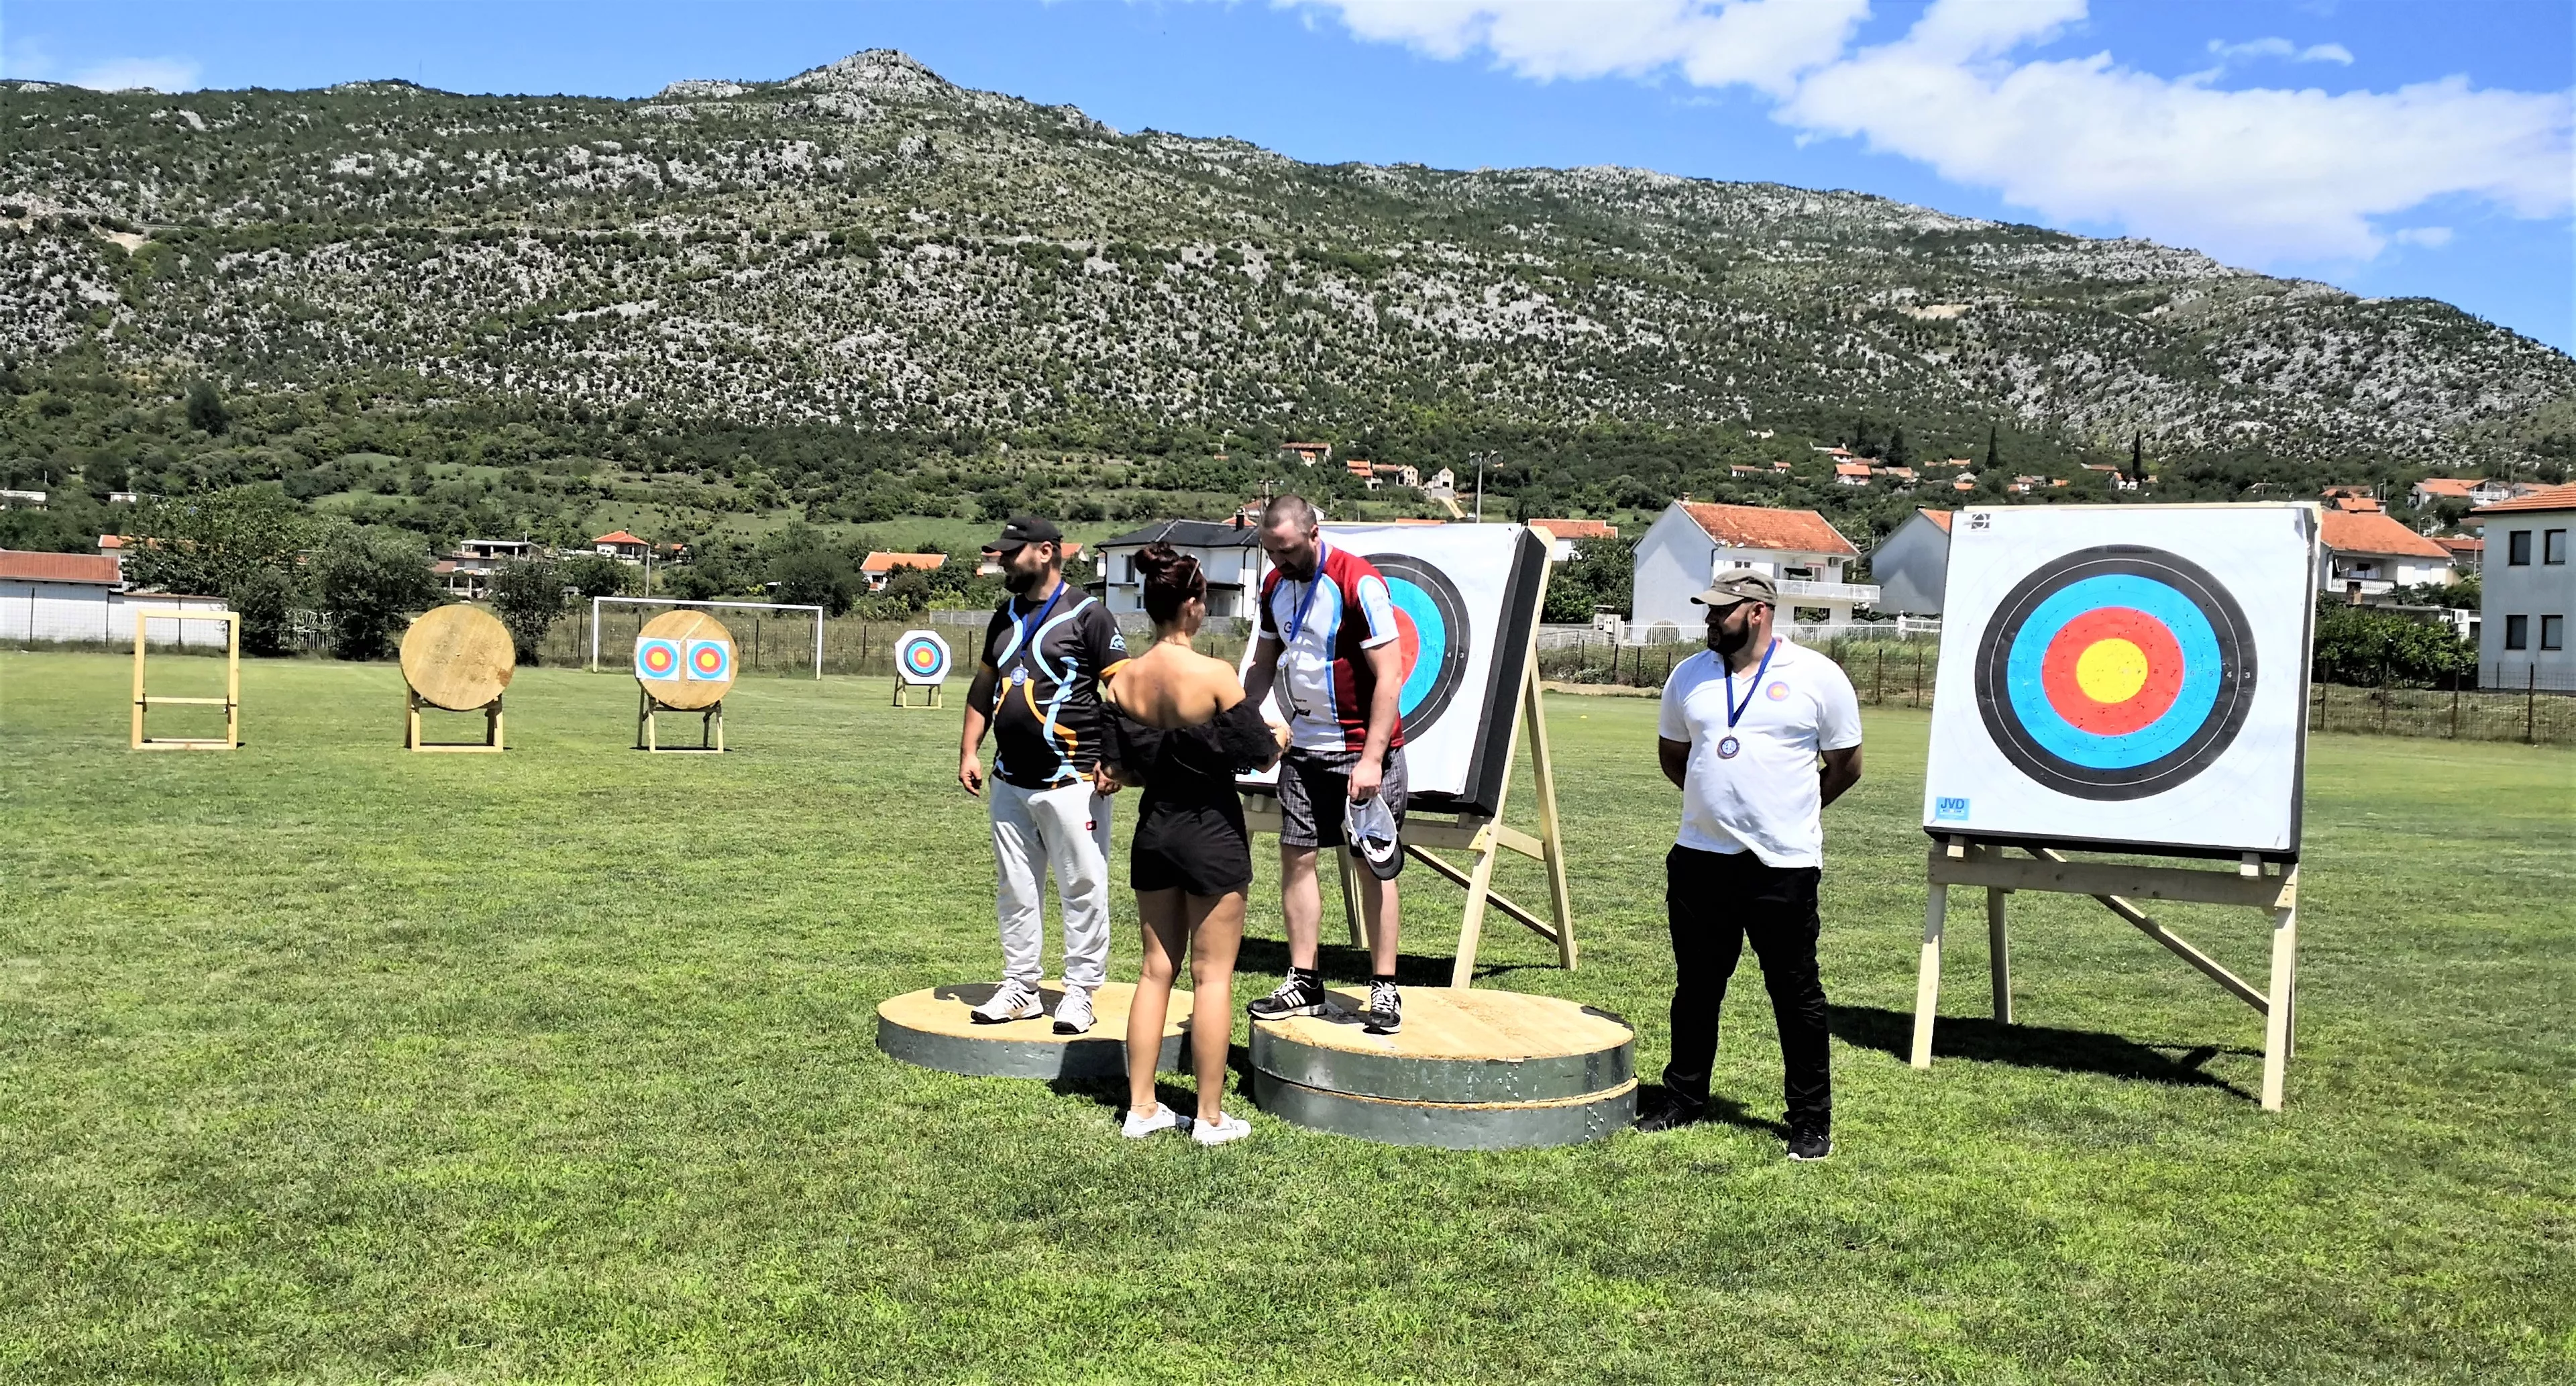 Strelicarski Klub Banjaluka in Bosnia and Herzegovina, Europe | Archery - Rated 1